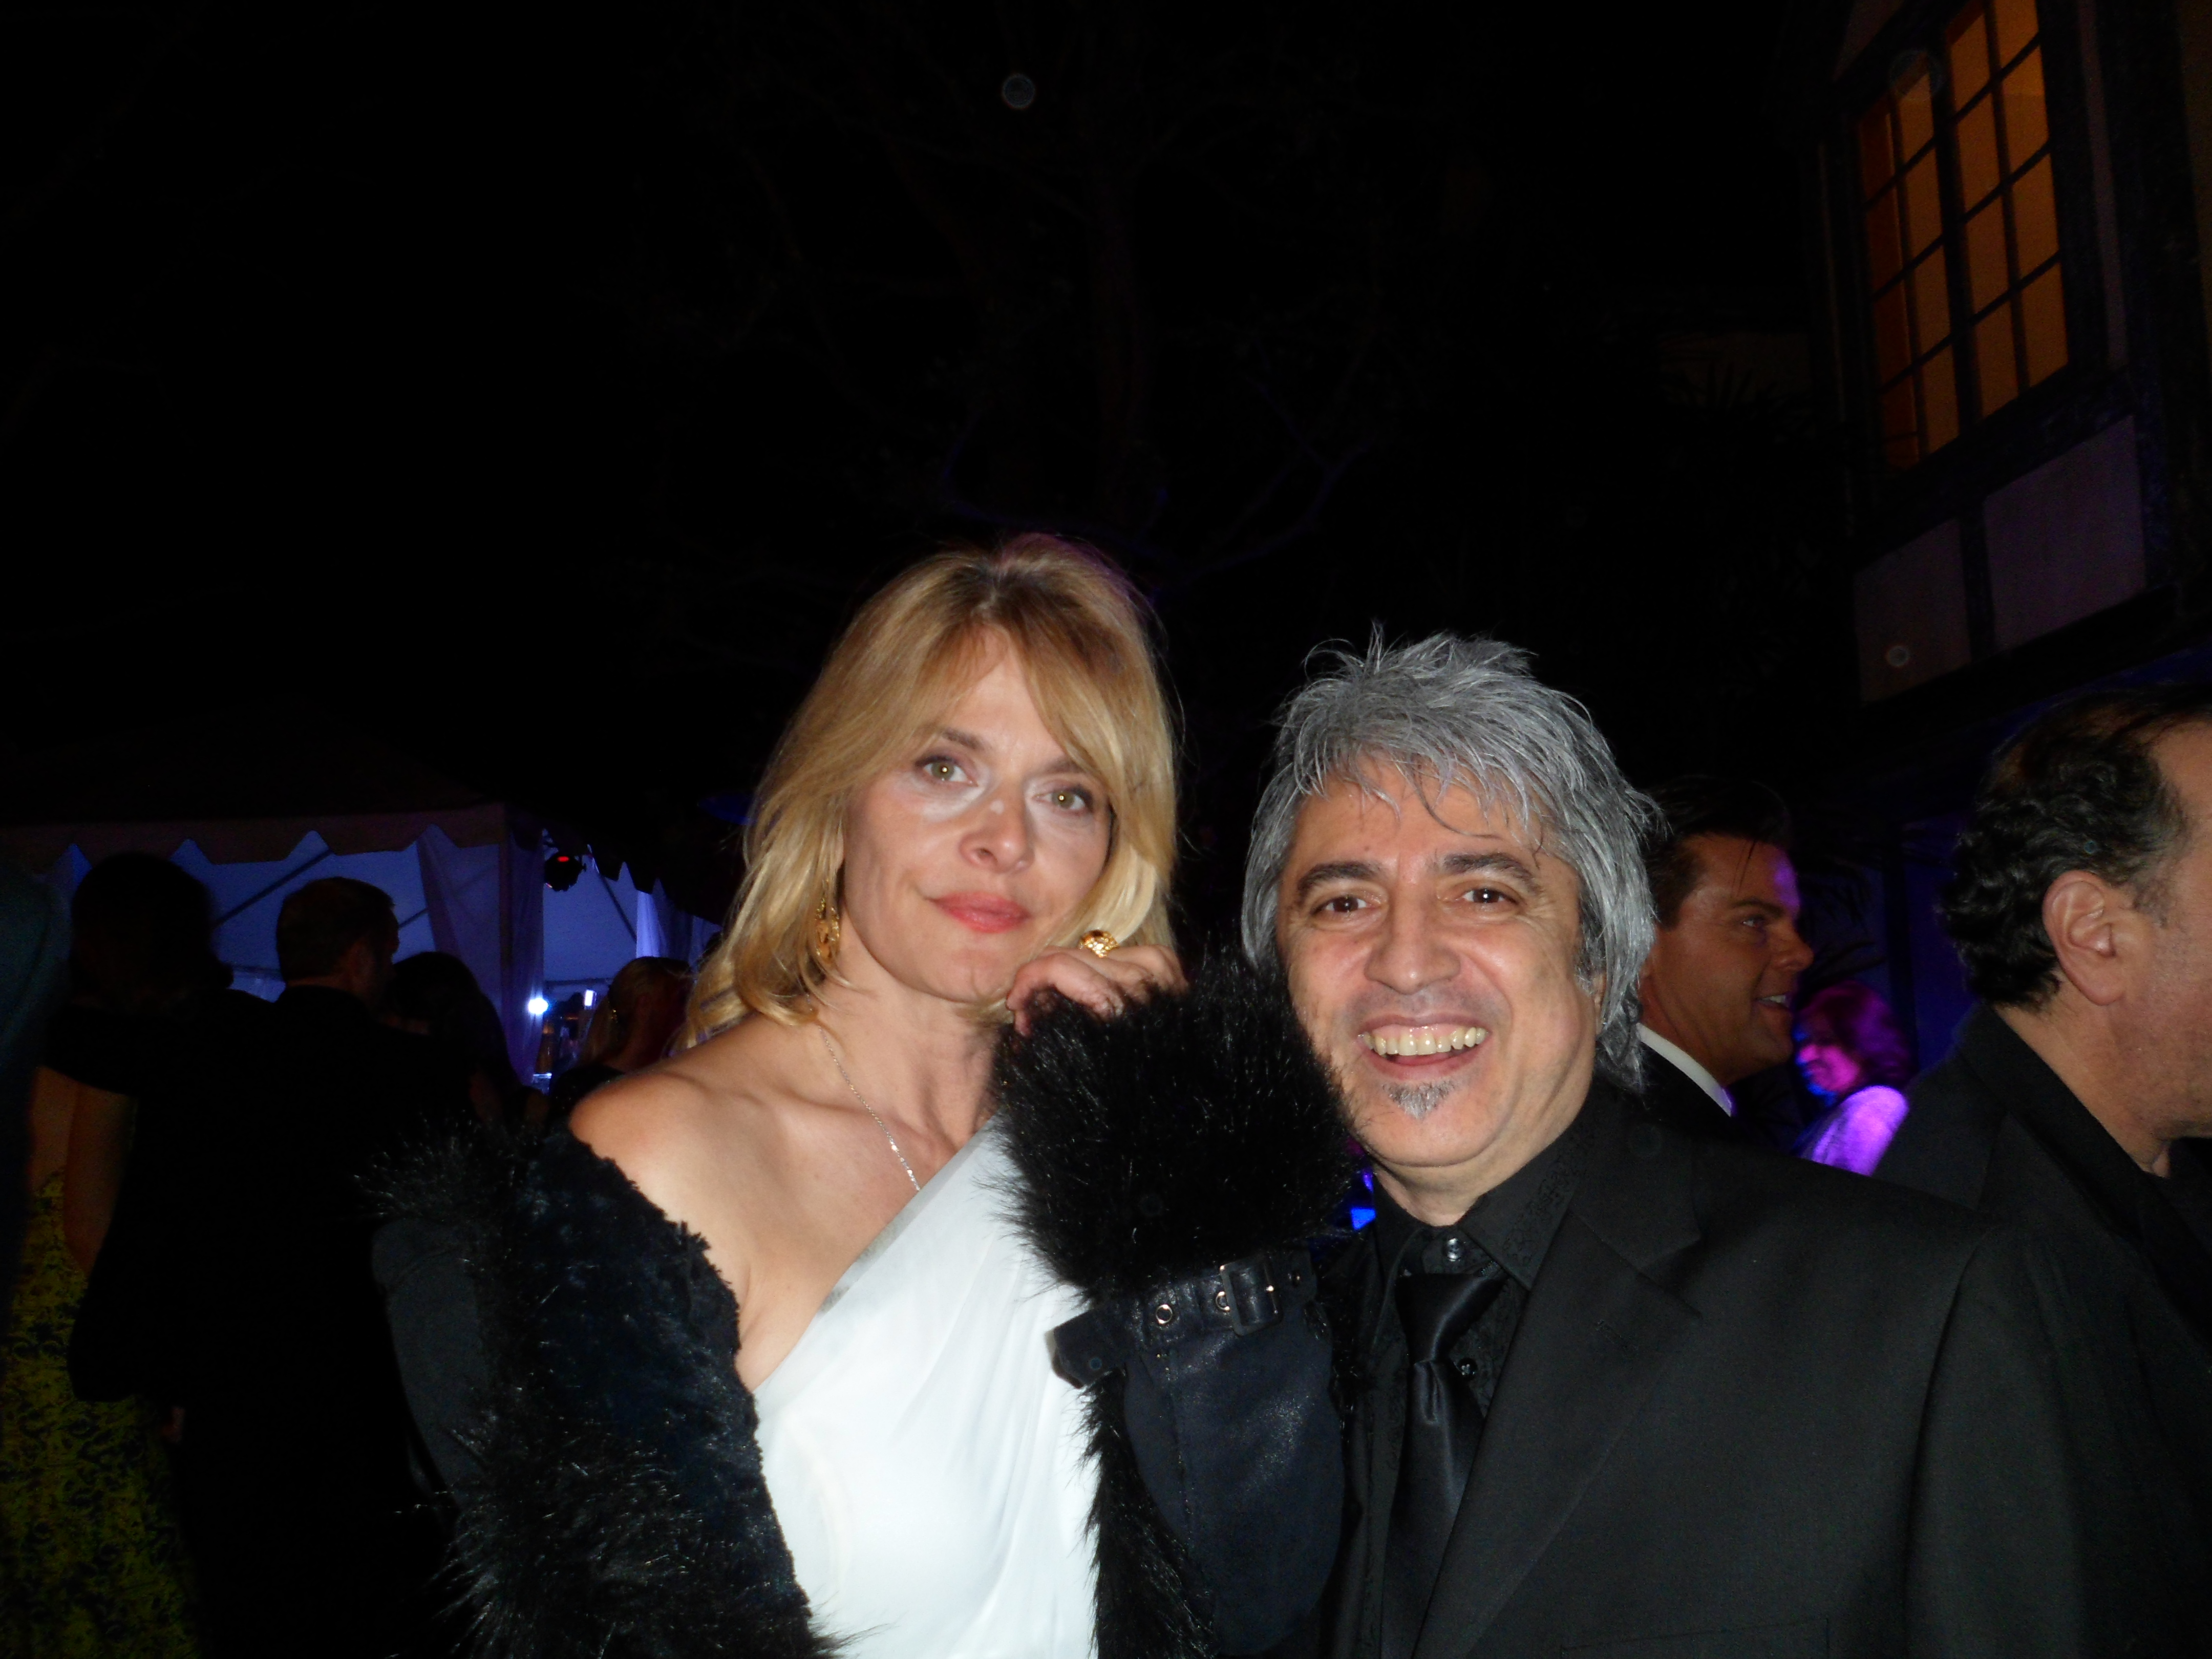 Nastassja Kinski and Boris Acosta at 2013 Children Uniting Nations Oscars viewing party.